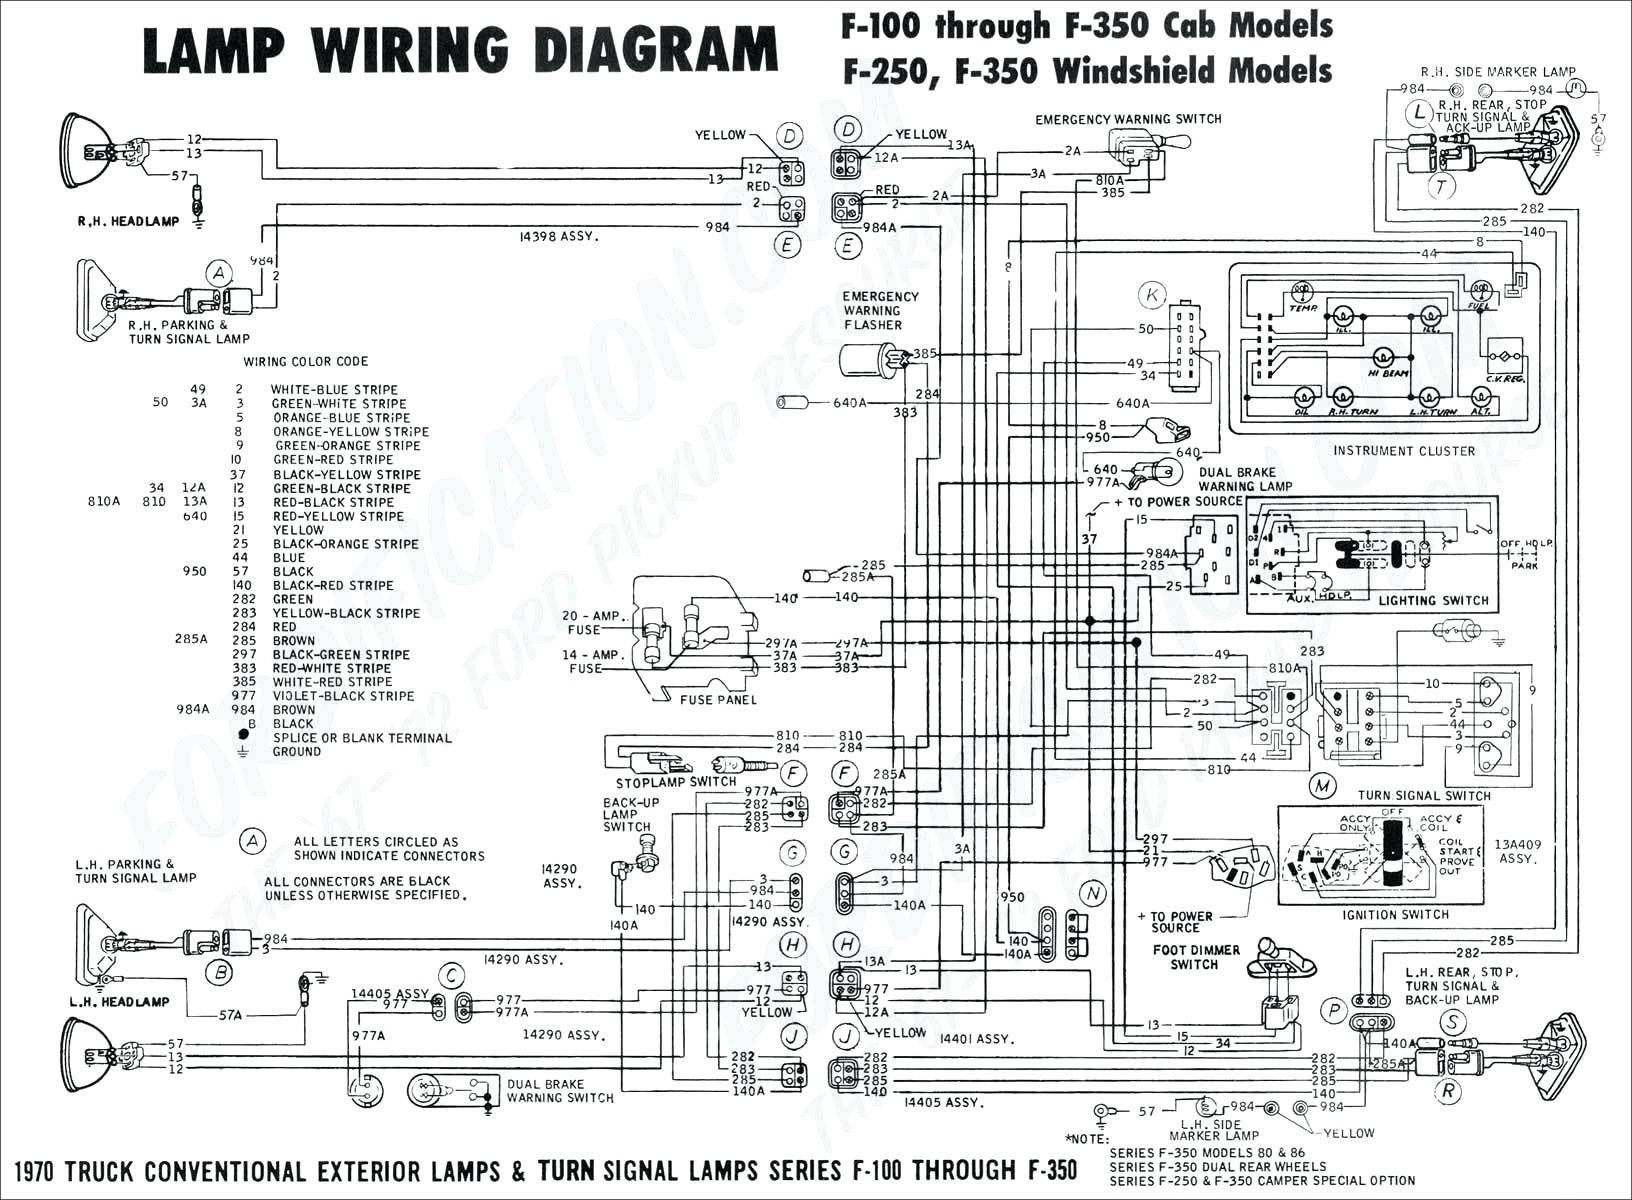 2004 Chevy Cavalier Wiring Diagram 2000 Cavalier Dimmer Wiring Wiring Diagram Used Of 2004 Chevy Cavalier Wiring Diagram